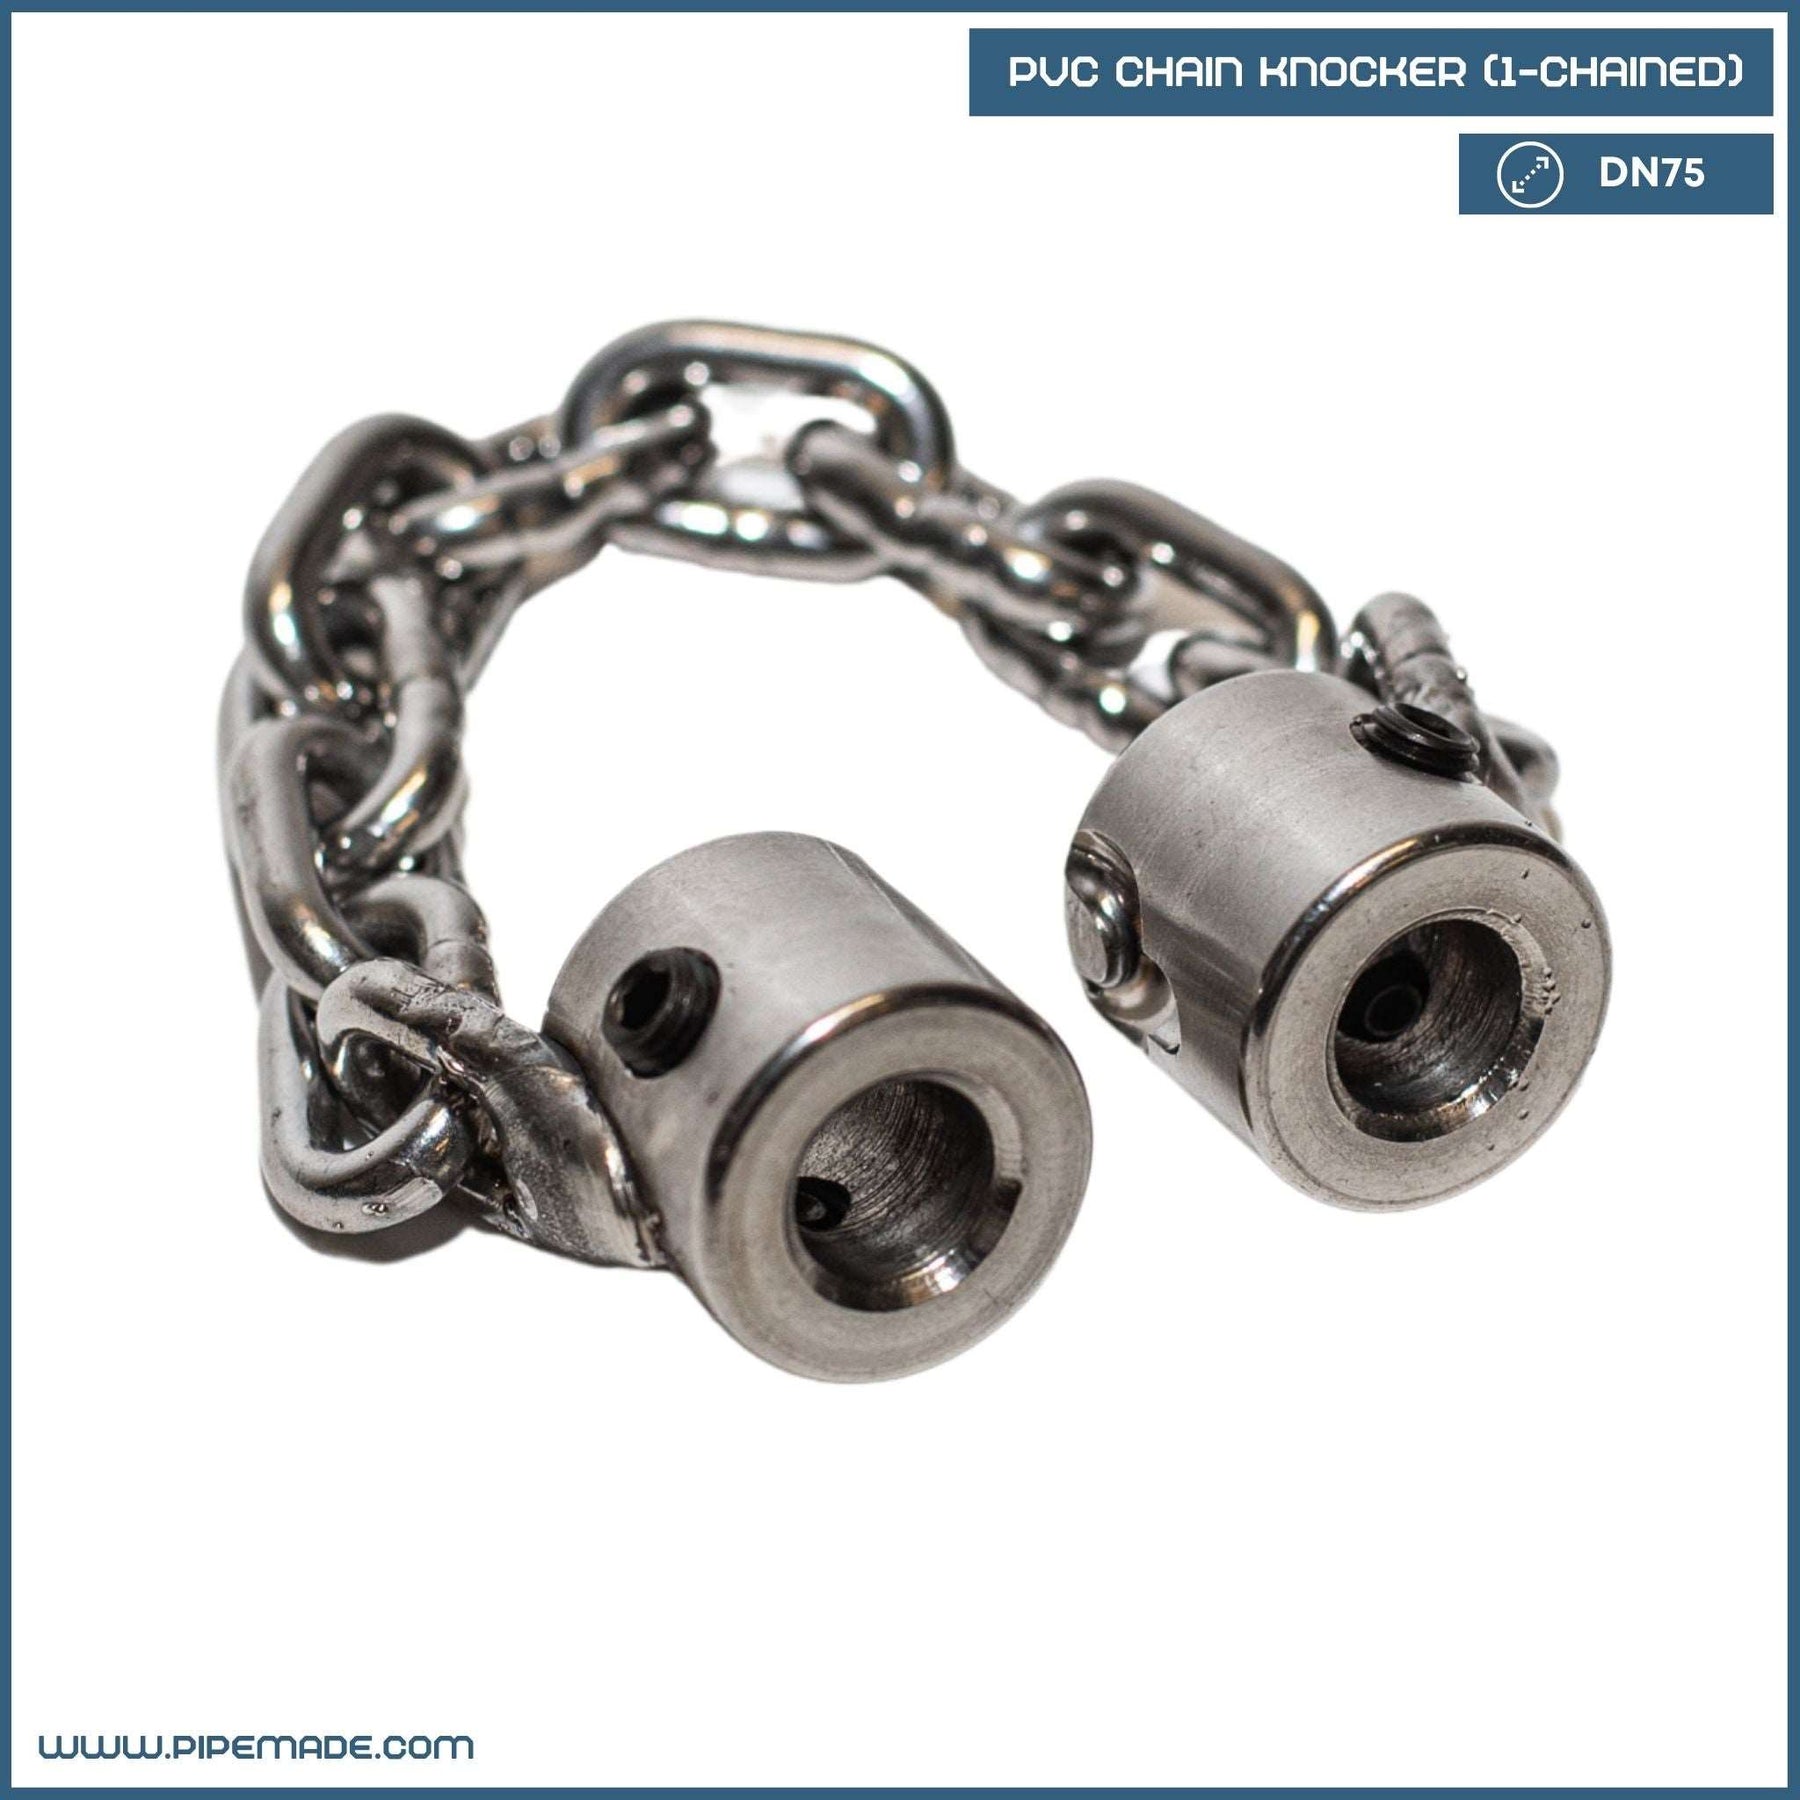 PVC Chain Knocker (1-Chained) | Plain Chain Knockers. Cleaning Chains | Zewer | zewer-plain-chain-knocker-1-chained